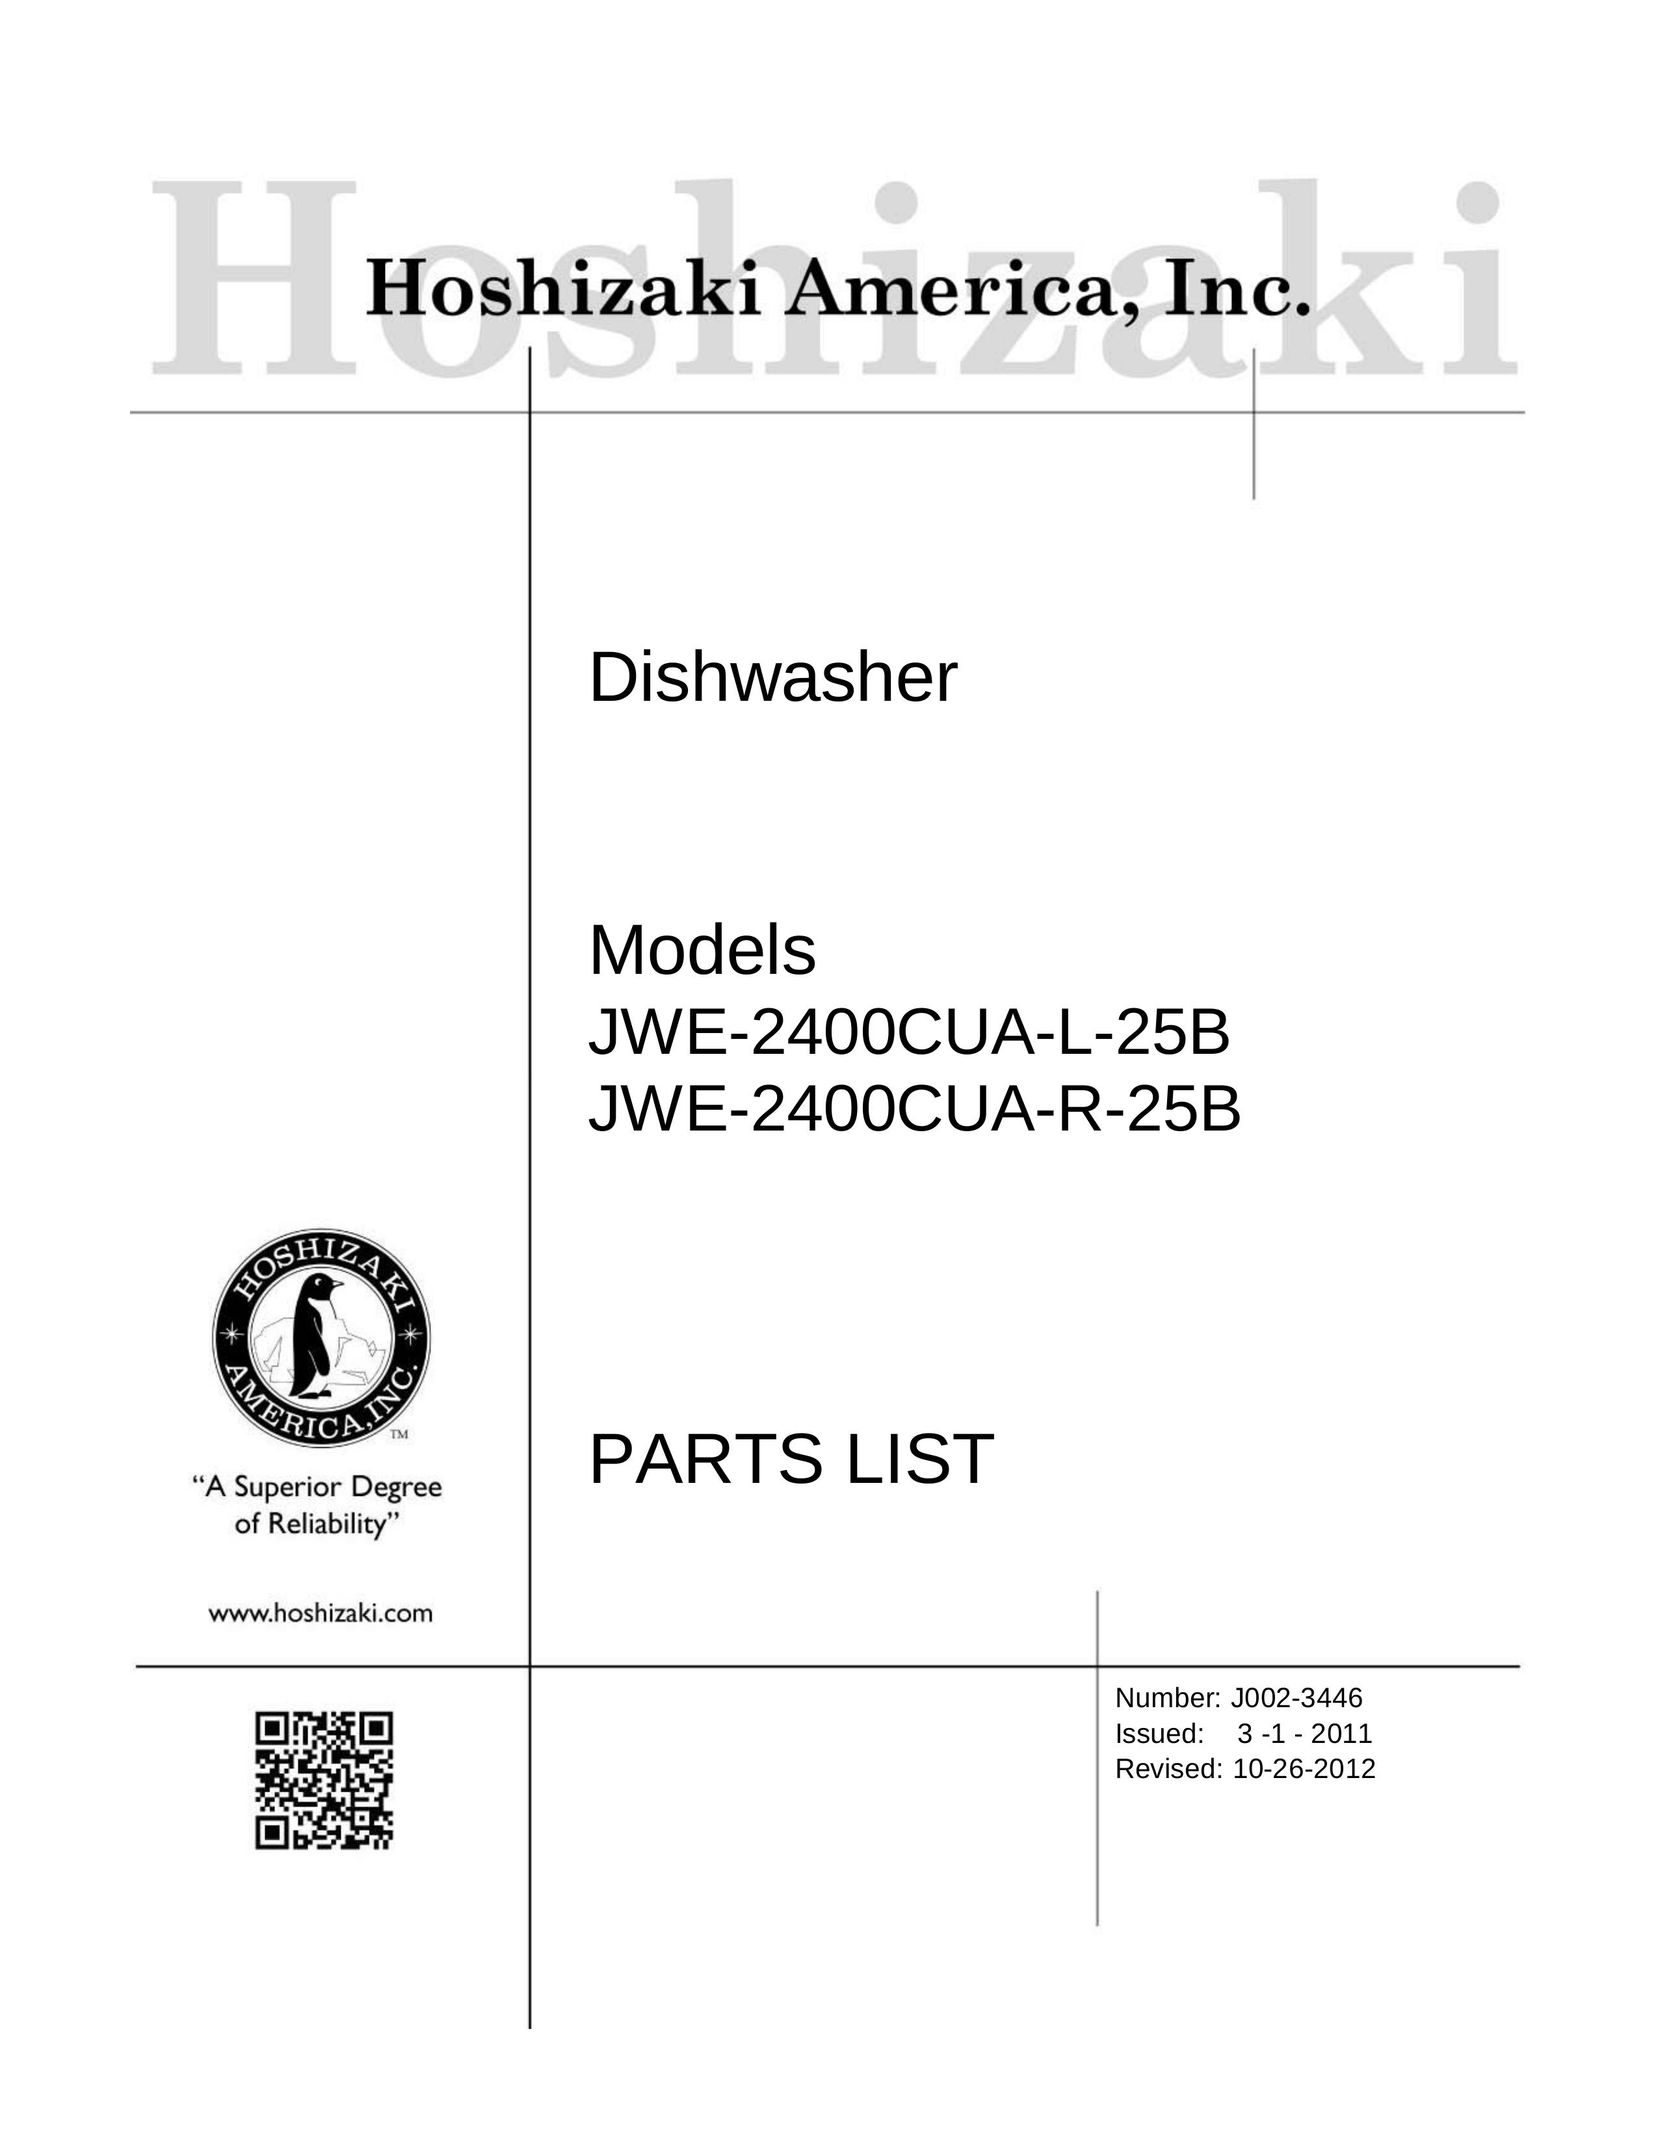 Hoshizaki JWE-2400CUA-R-25B Dishwasher User Manual